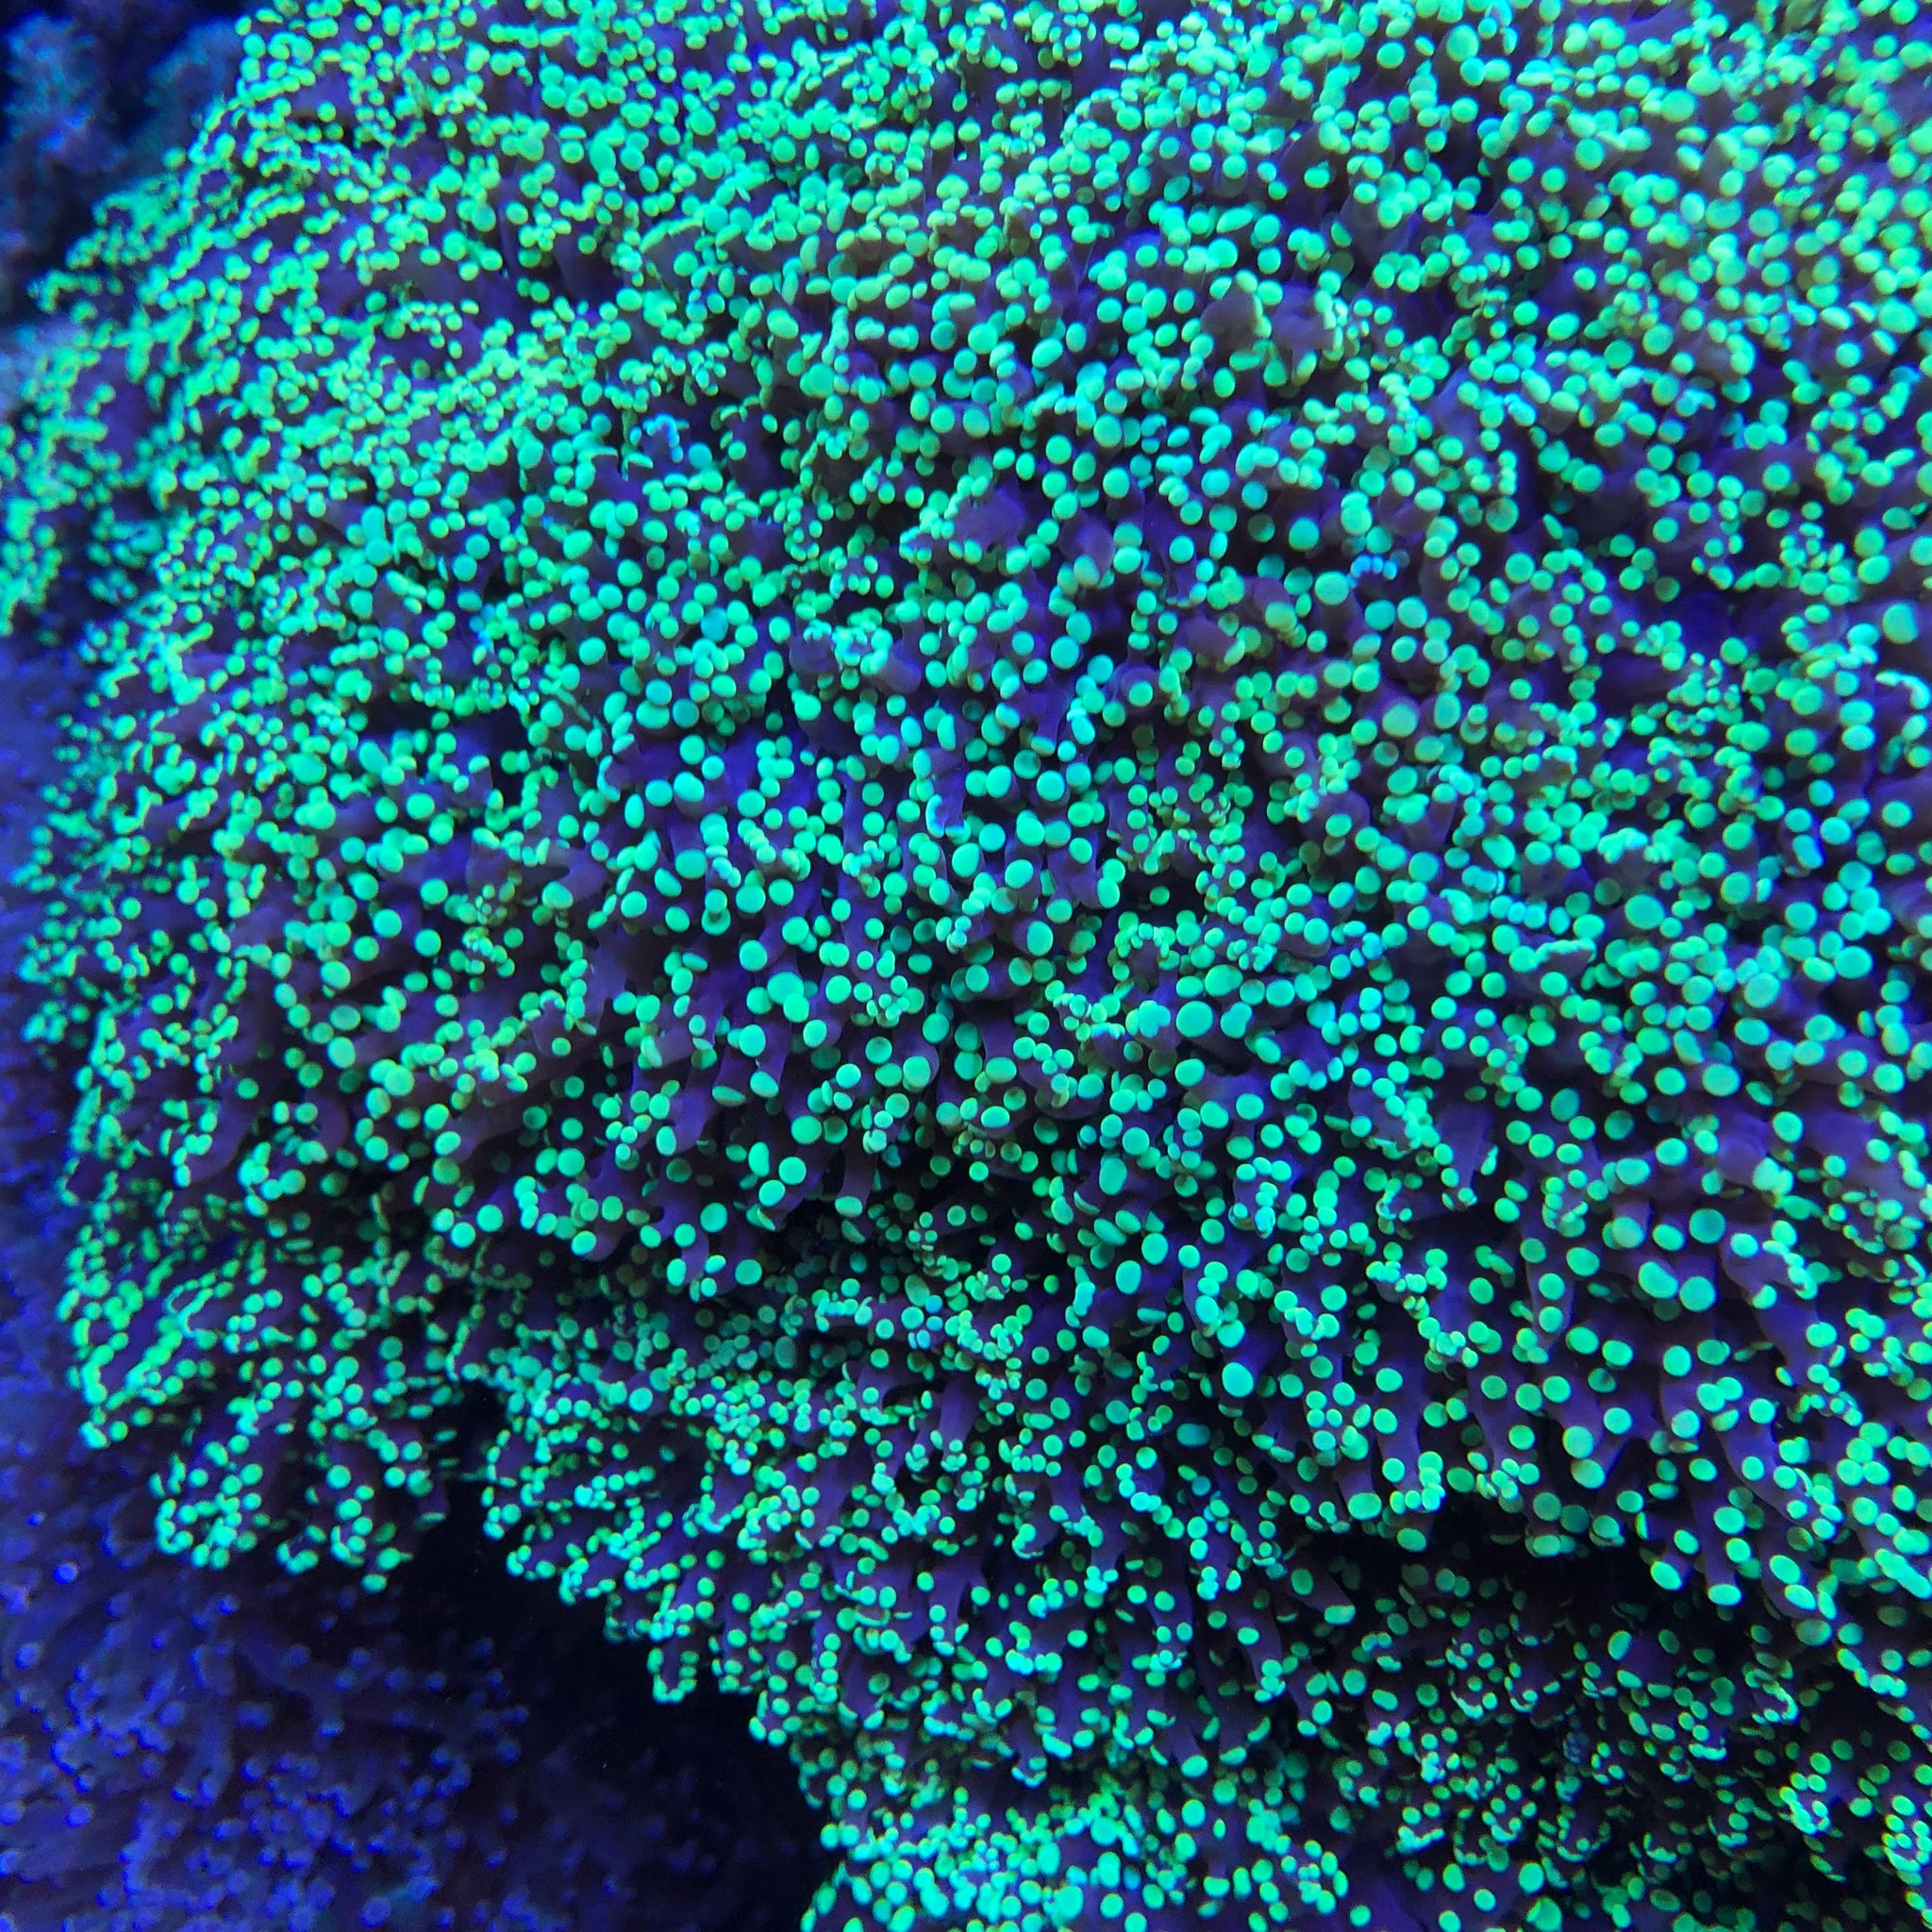 Ultra Green Frogspawn Coral (Branching)